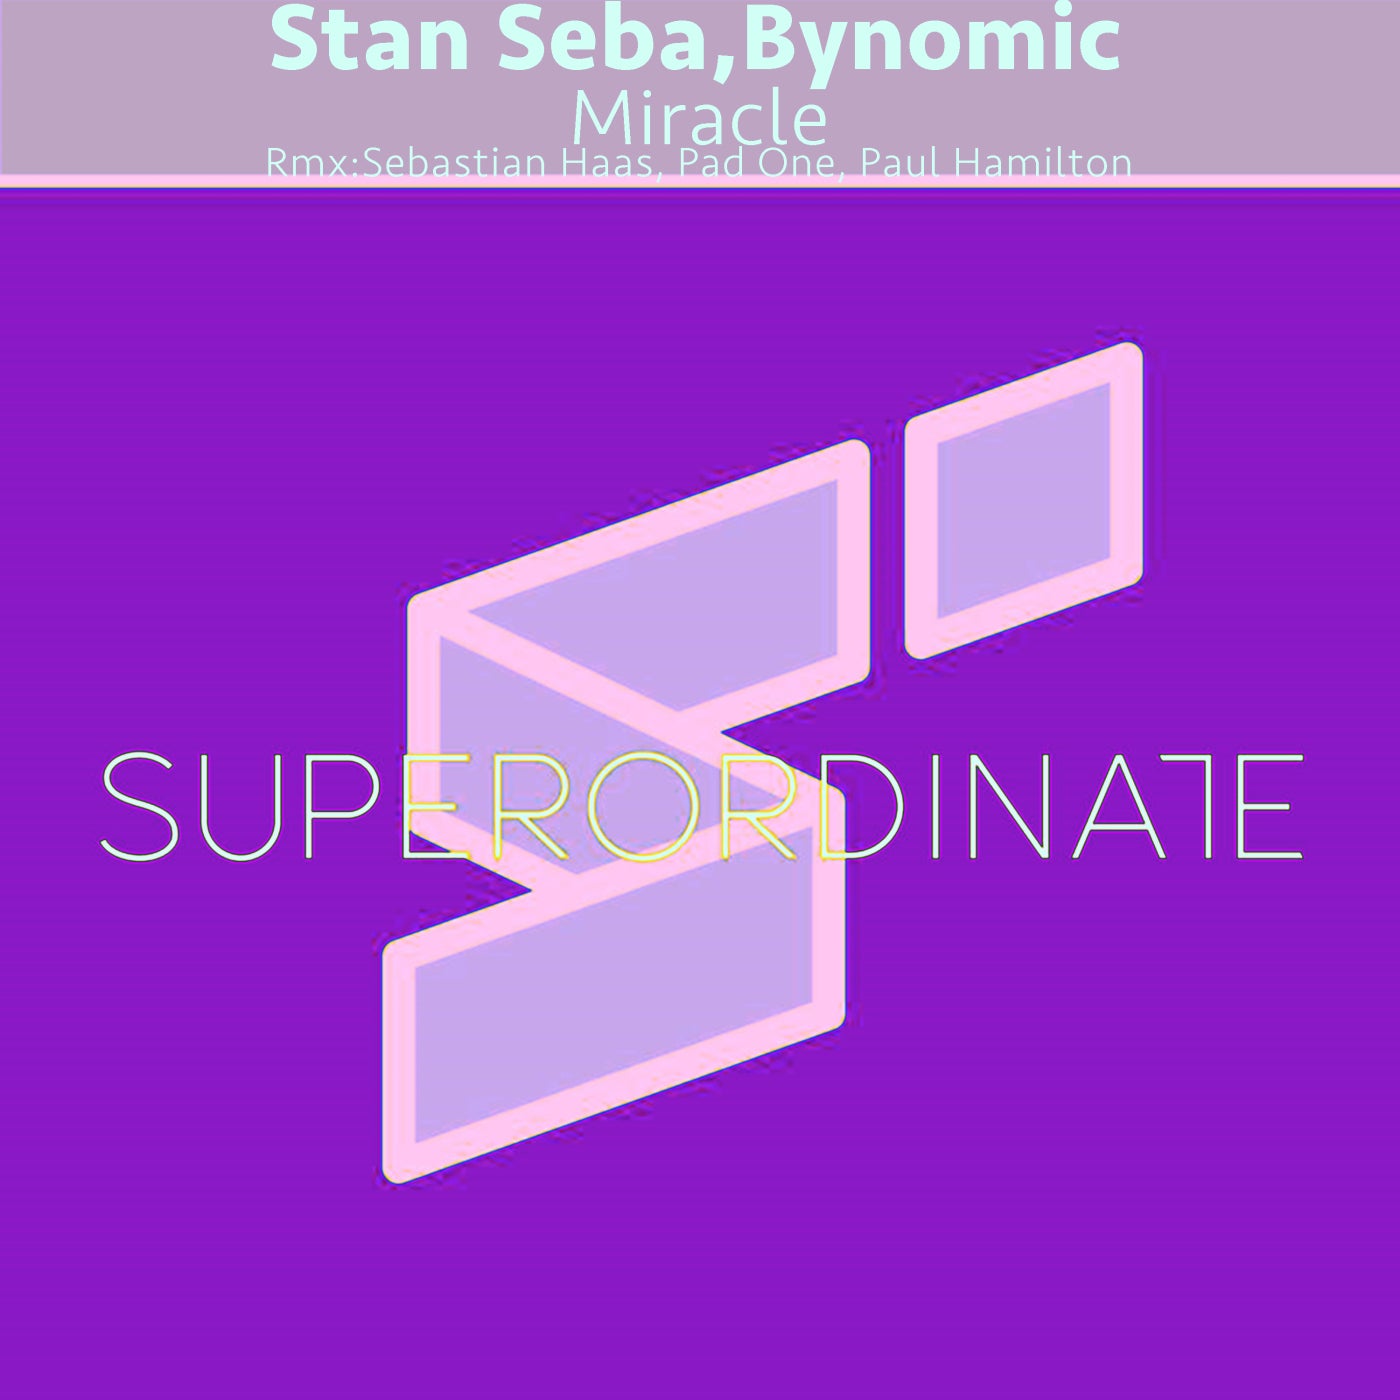 Stan Seba, Bynomic - Miracle (sebastian Haas Rmx) on Revolution Radio